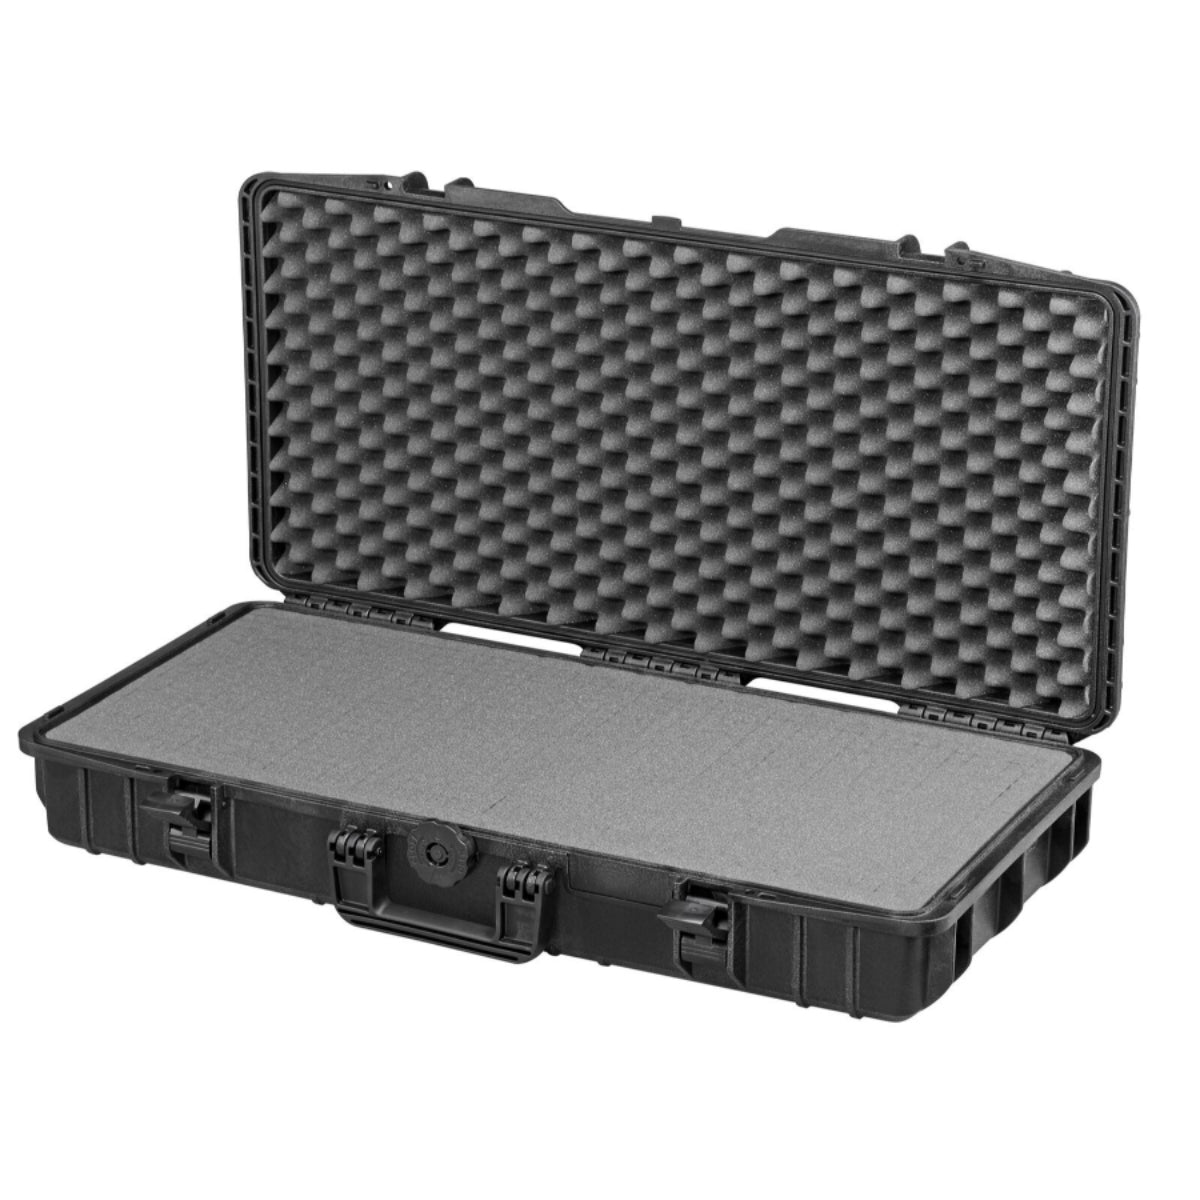 SP PRO 800S Black Carry Case, Cubed Foam, ID: L800xW370xH140mm